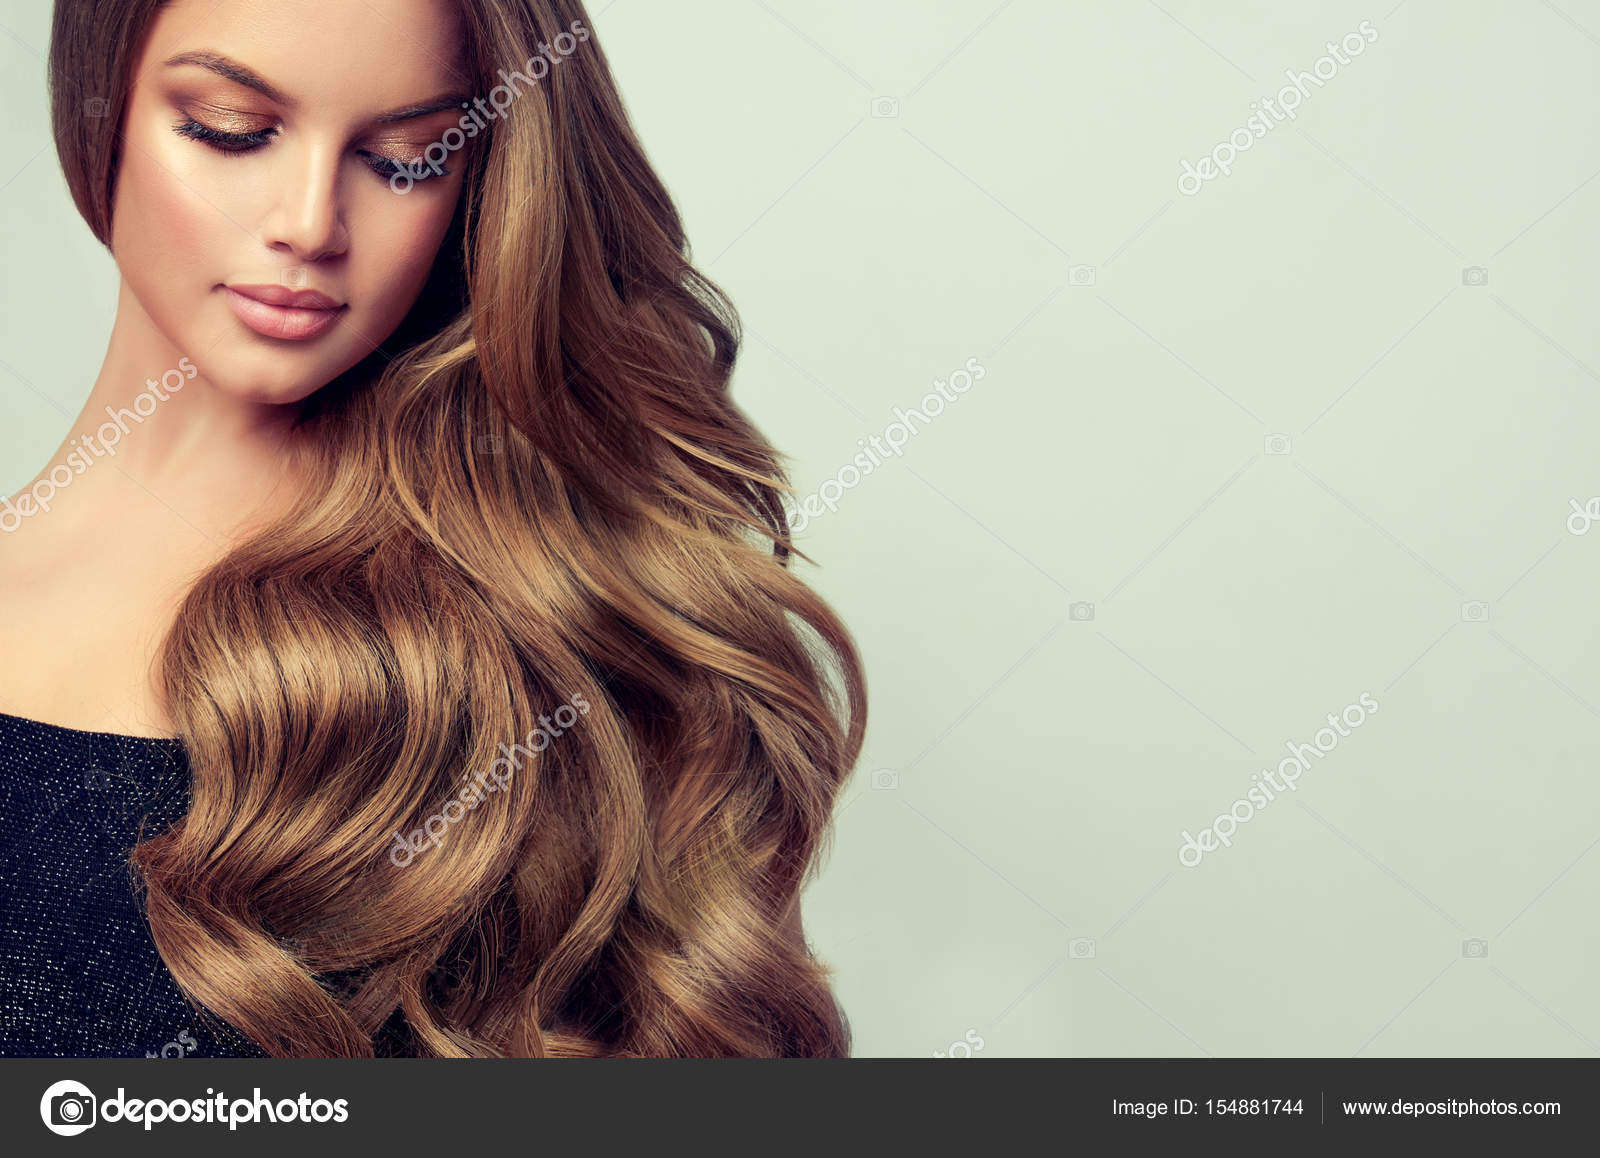 Volume hair Stock Photos, Royalty Free Volume hair Images | Depositphotos